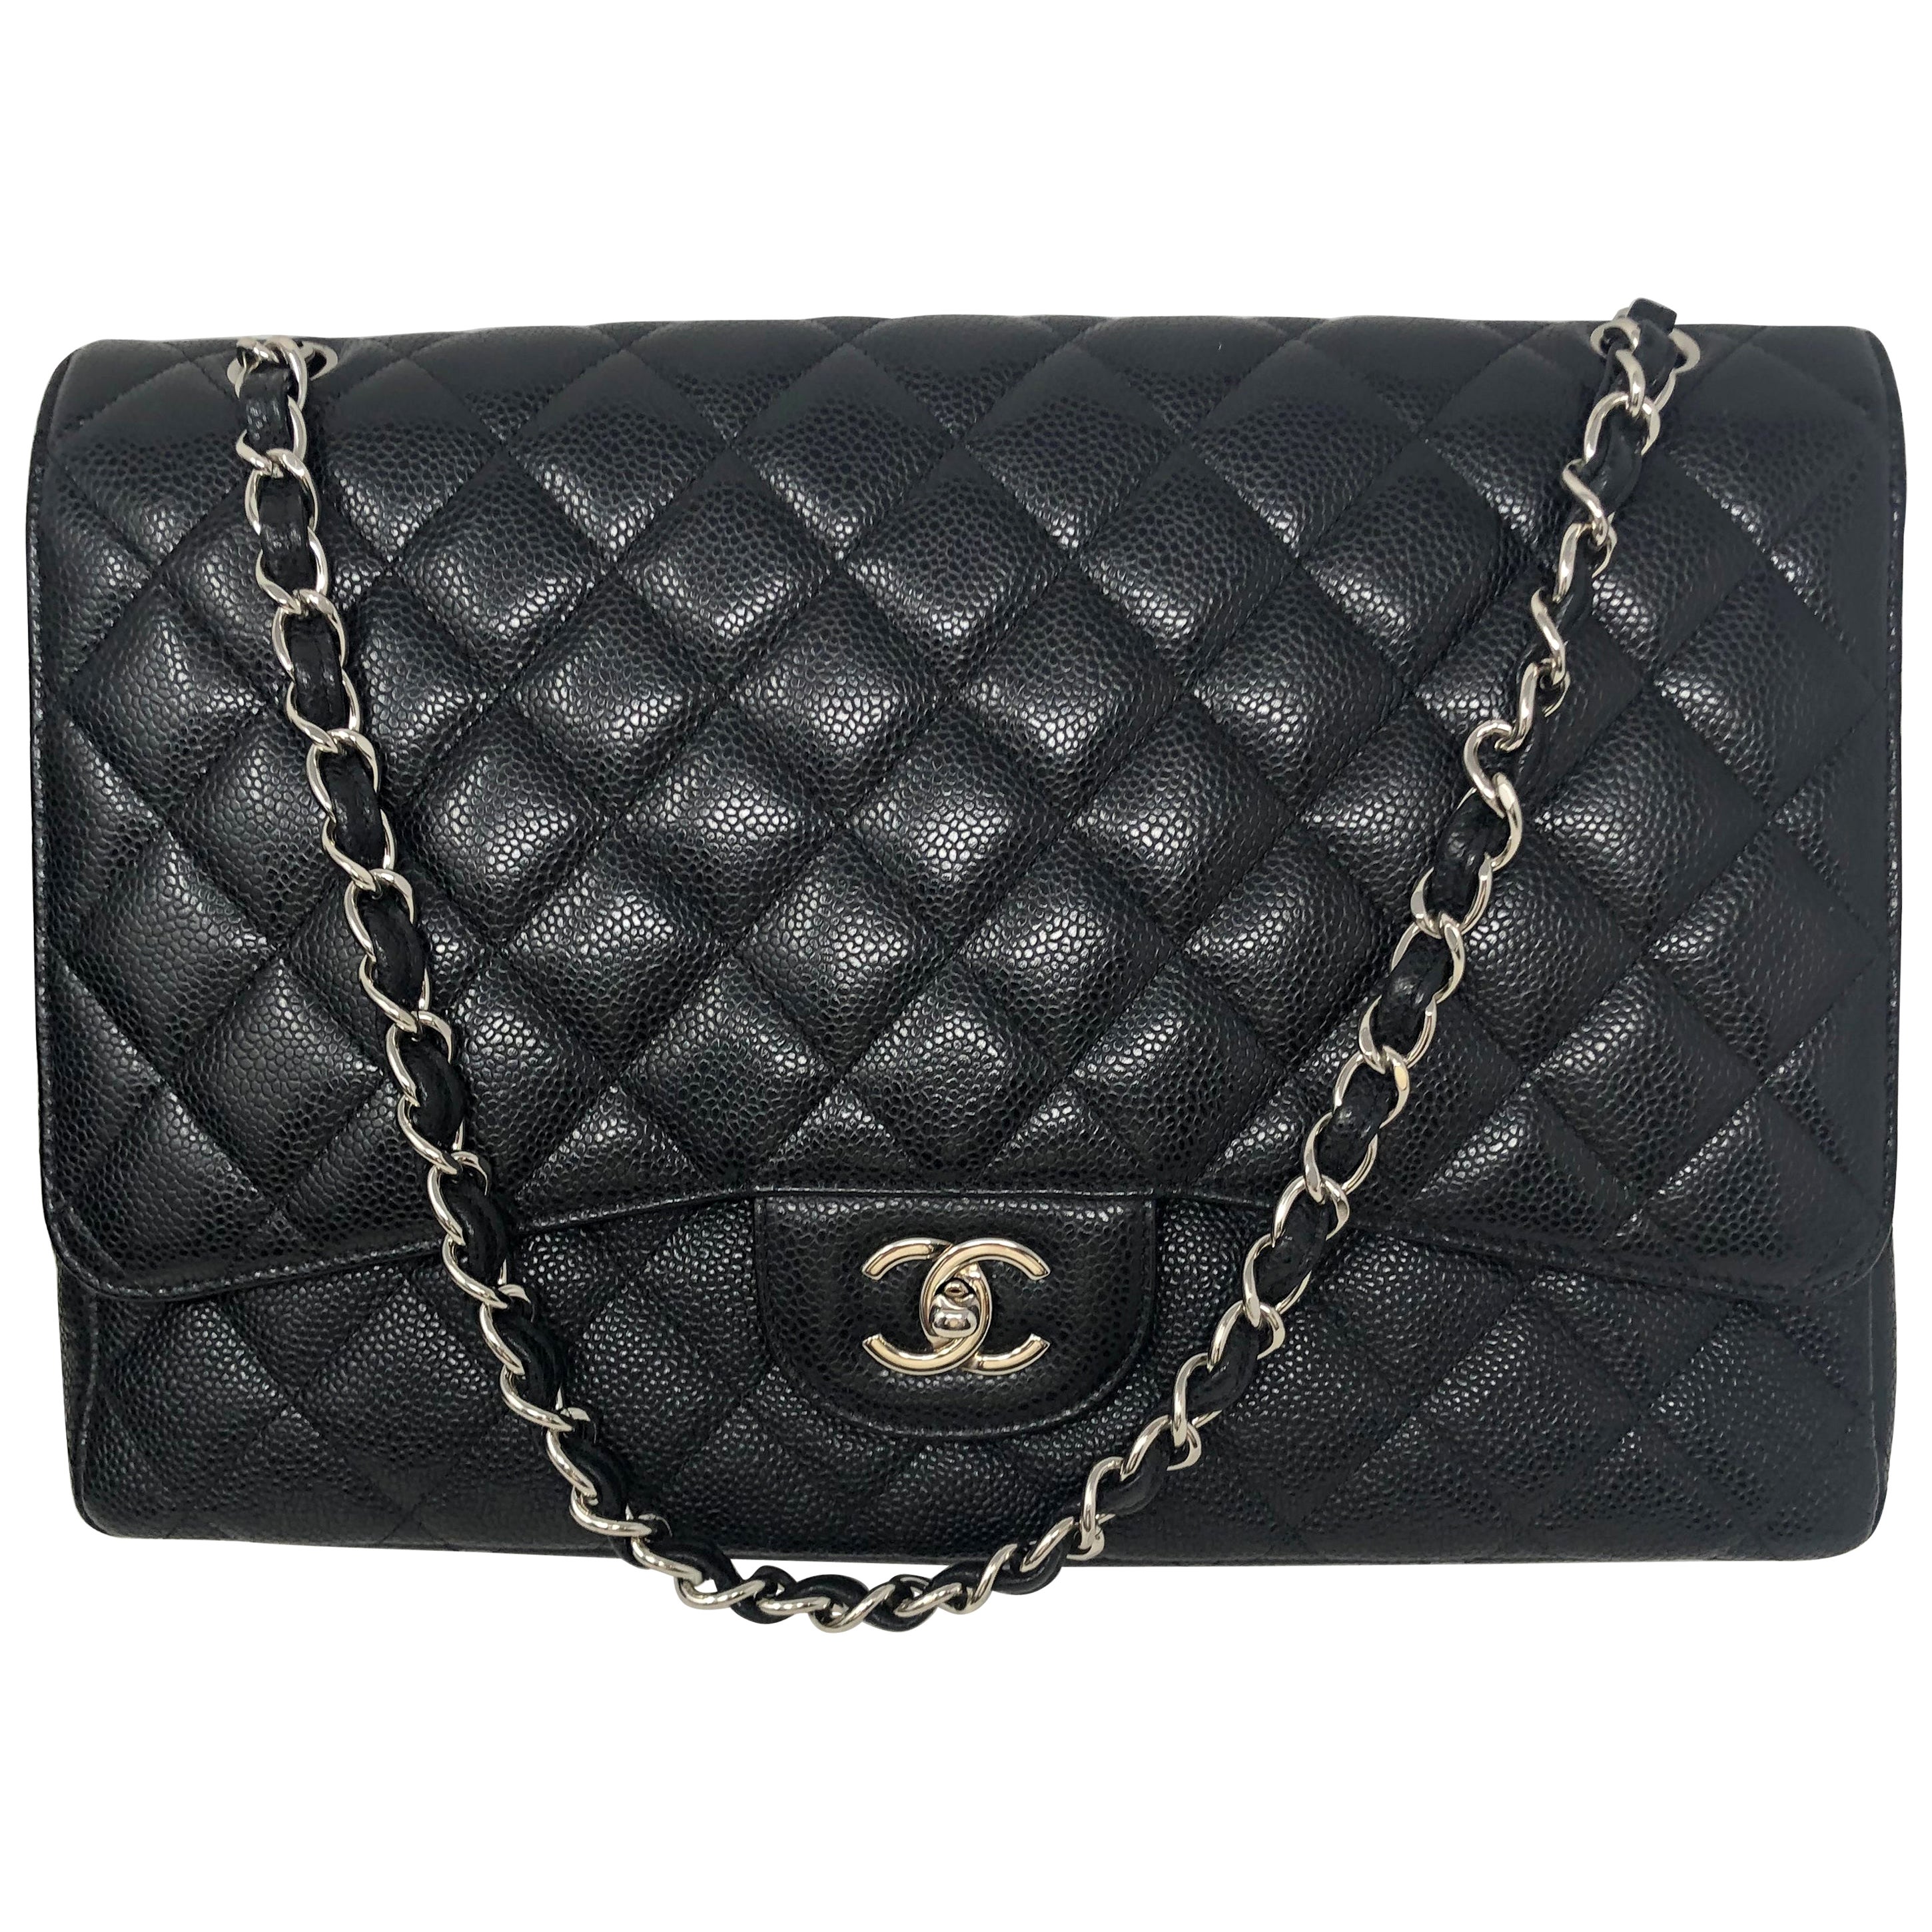 Chanel Black Caviar Leather Maxi Bag